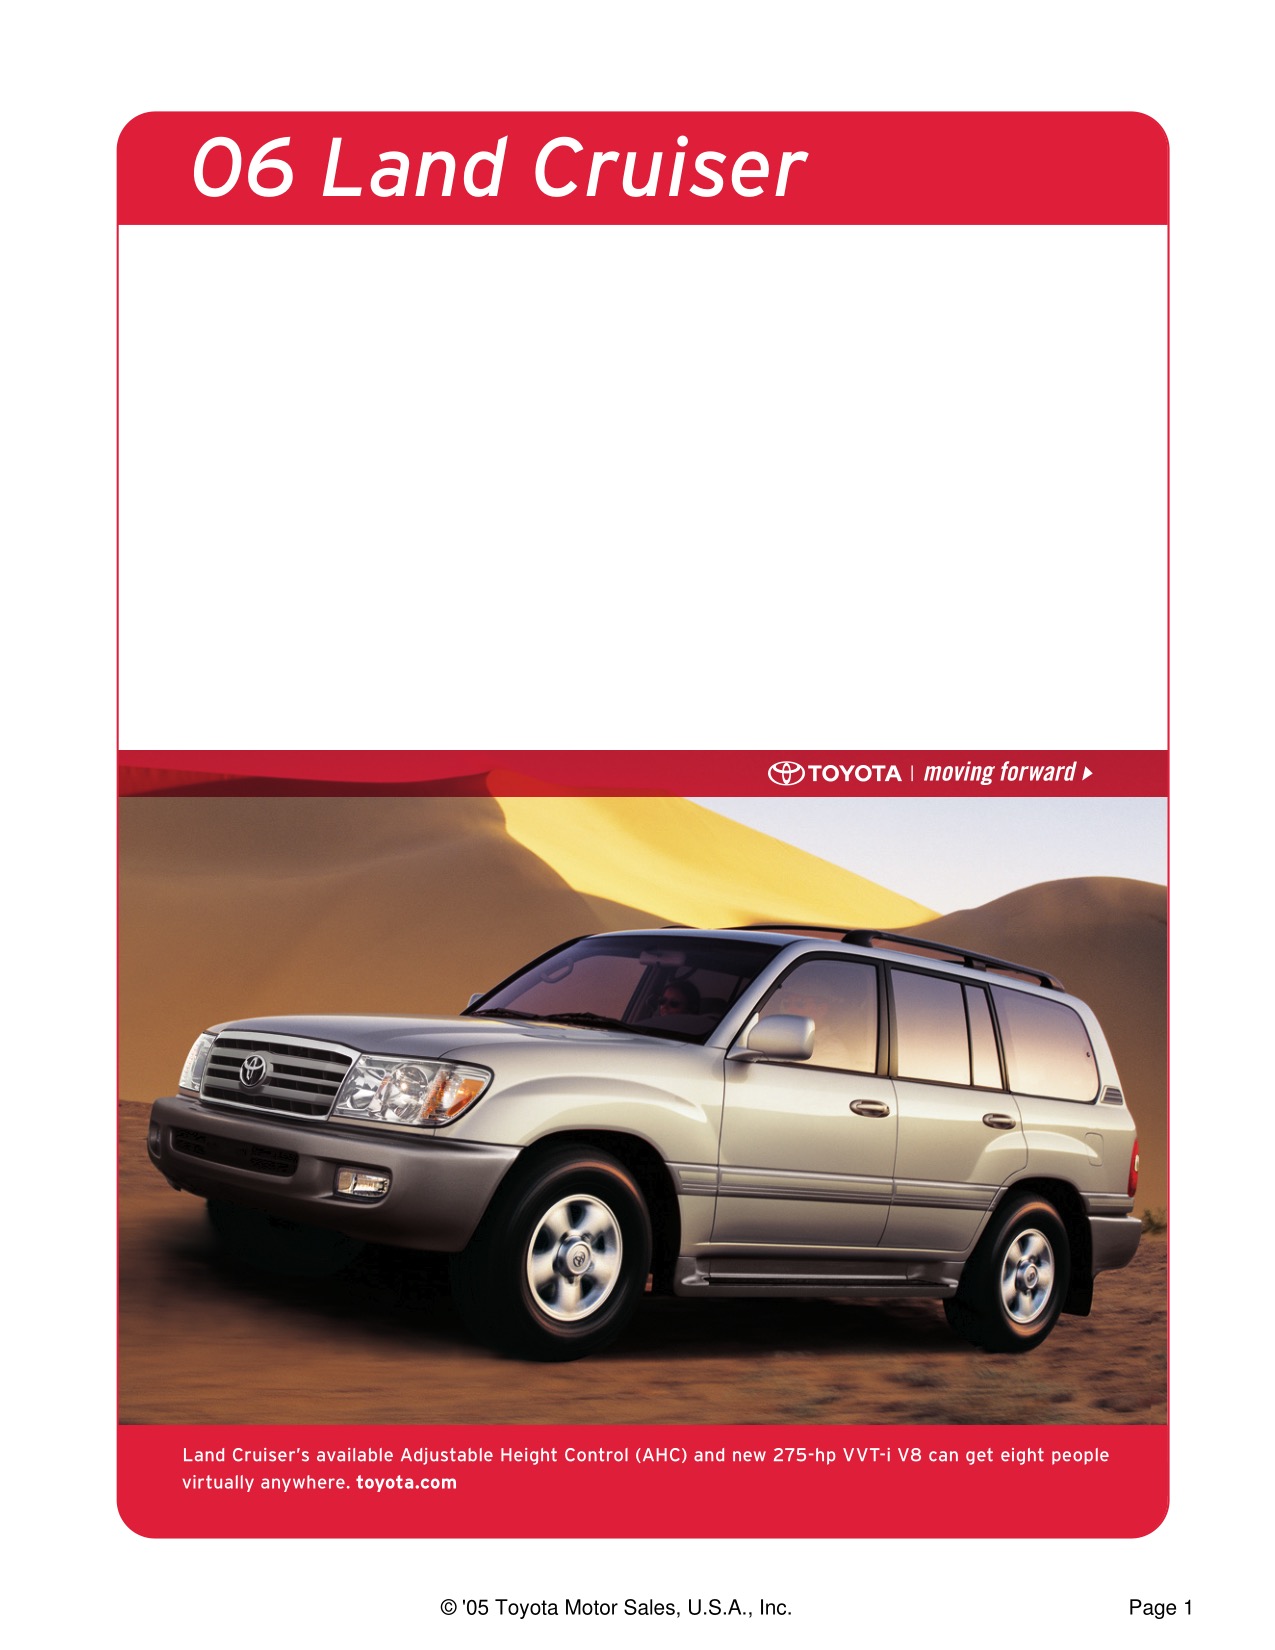 2006 Toyota Land Cruiser Brochure